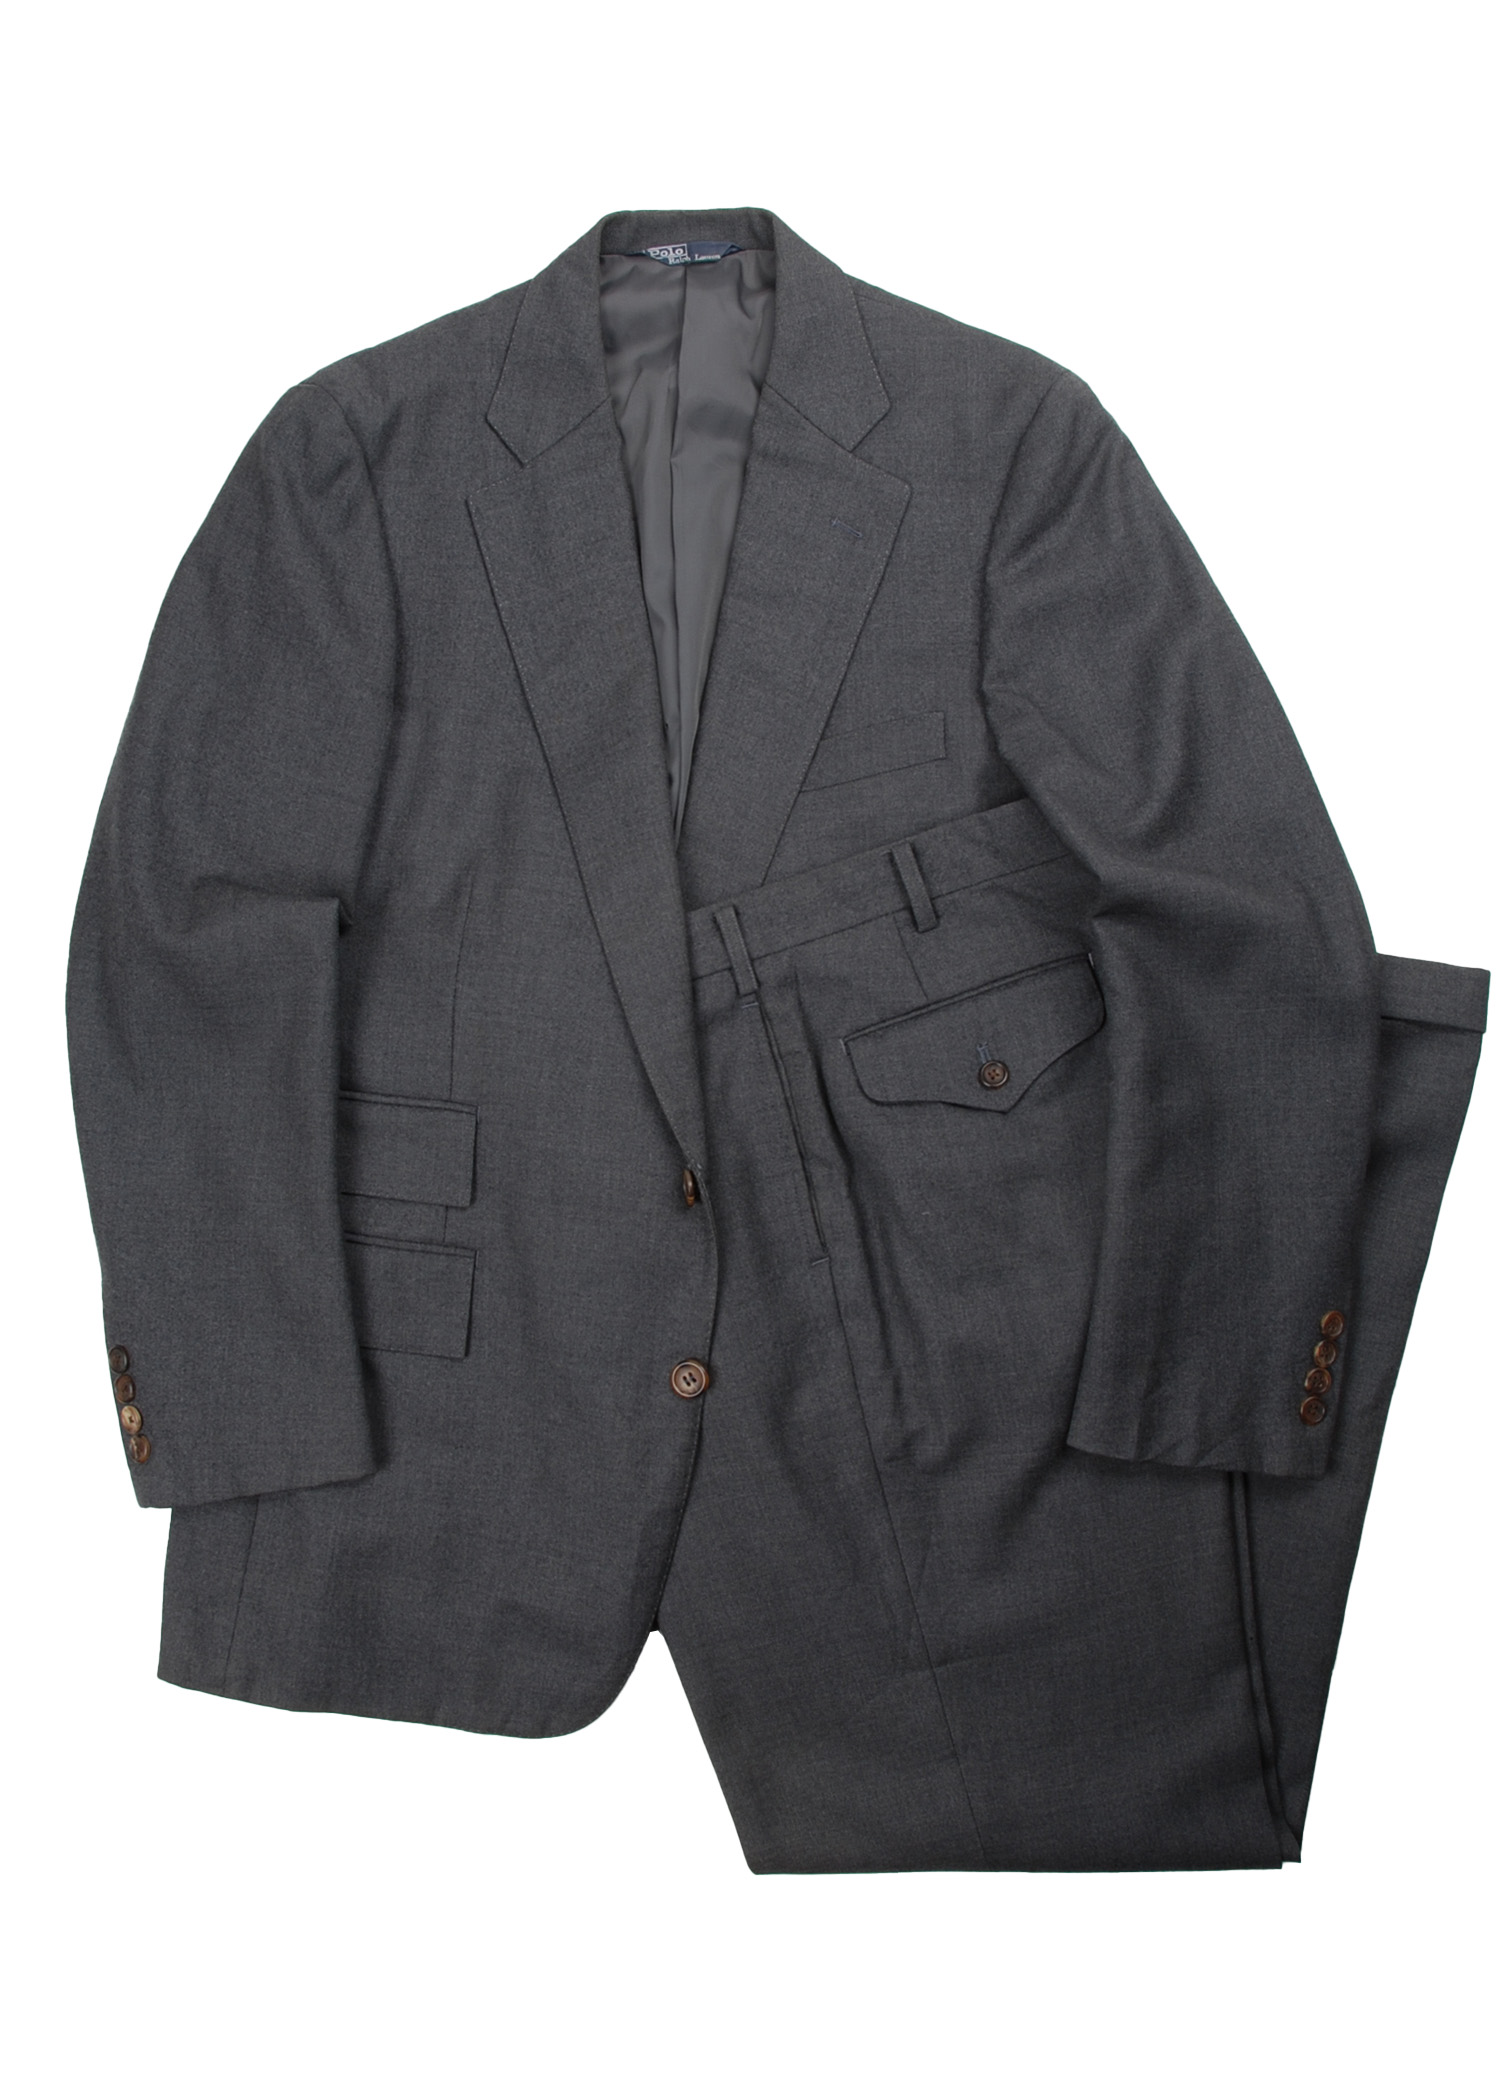 Polo by Ralph Lauren suit